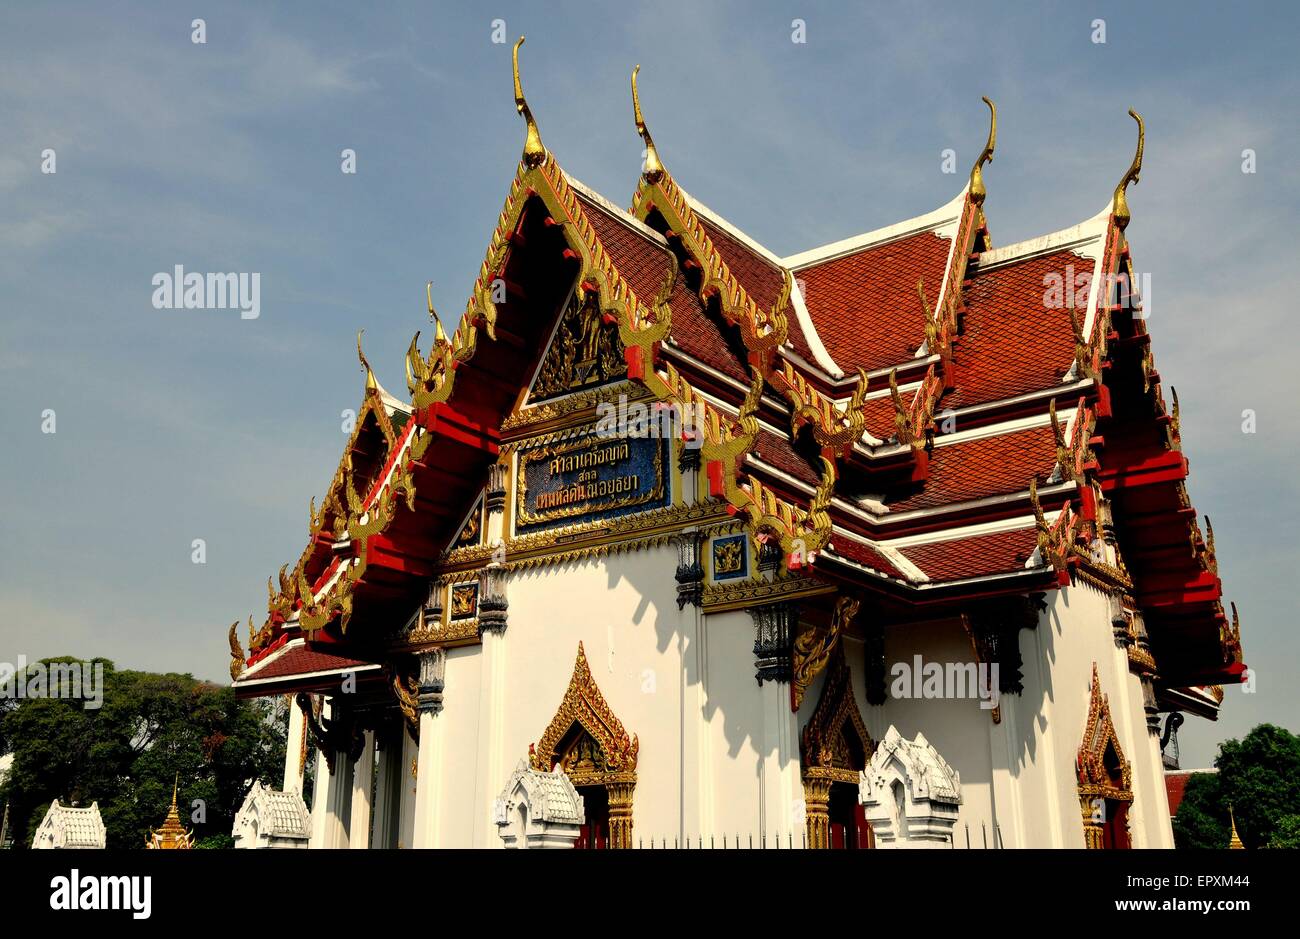 Bangkok, Thailandia: la Sala pavilion con ripidamente inclinate di tetti a capanna e dorati chofah bird-come ornamentsat Wat Ratchaburana Foto Stock